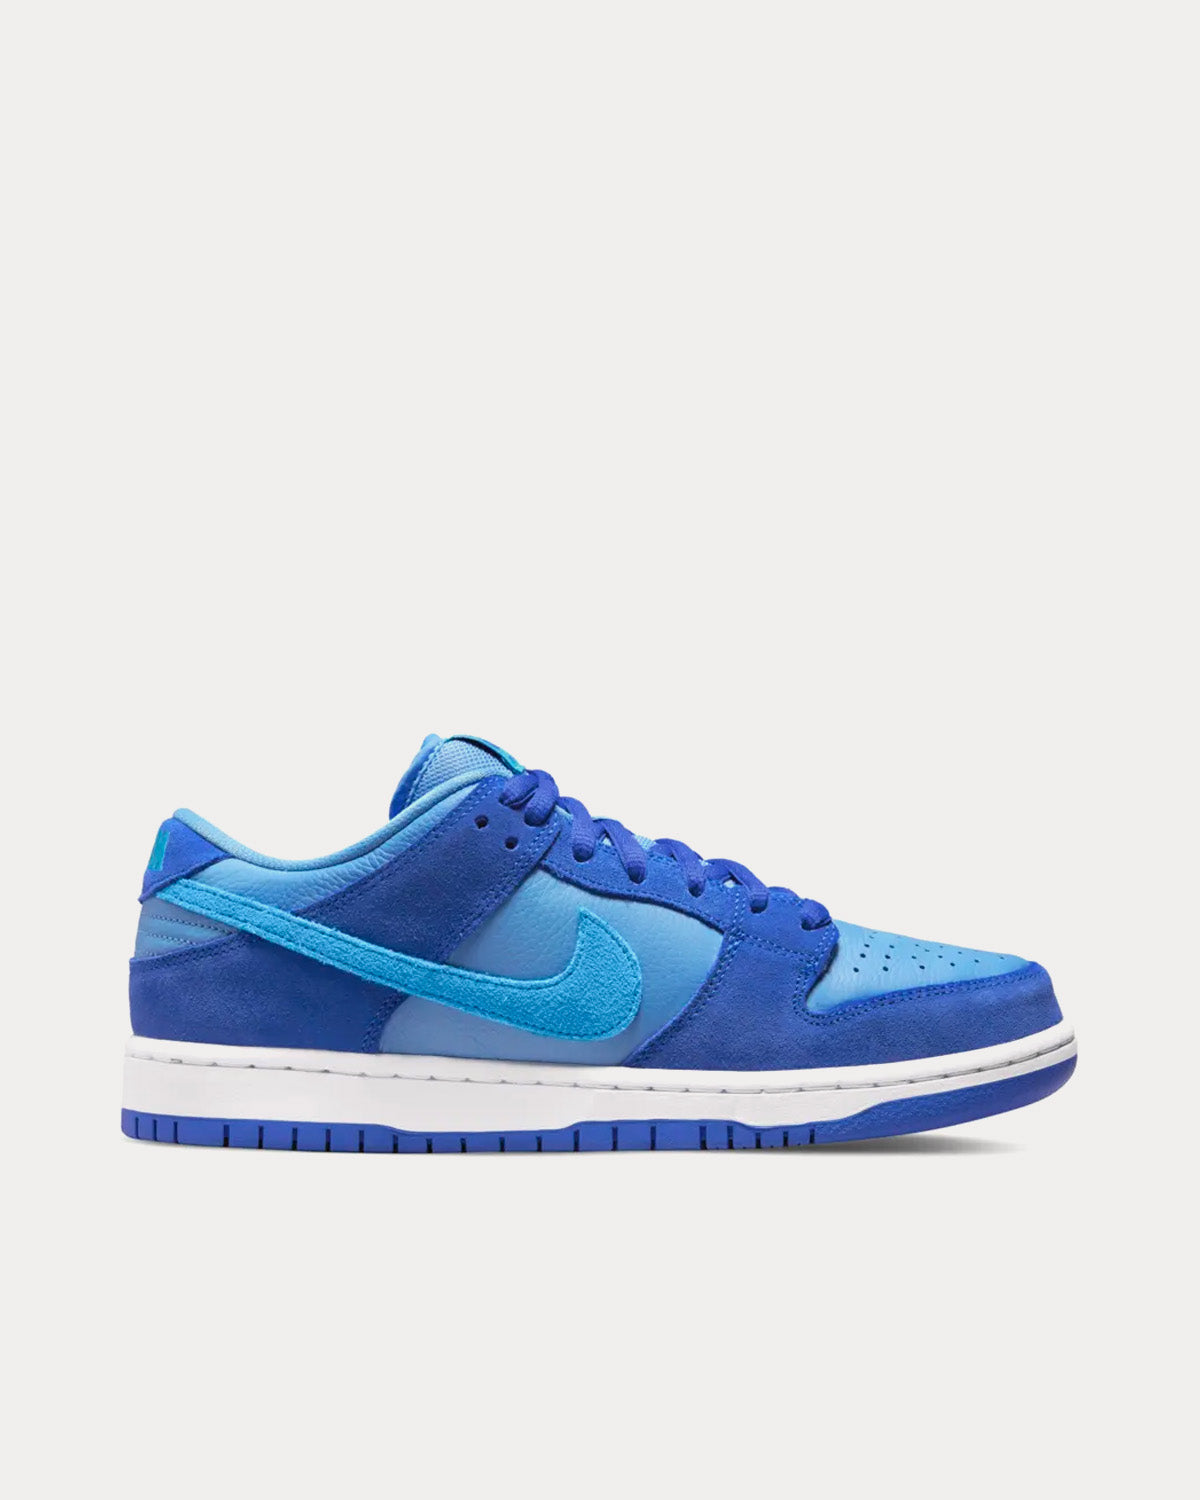 SB Dunk Low 'Blue Raspberry' Low Top Sneakers